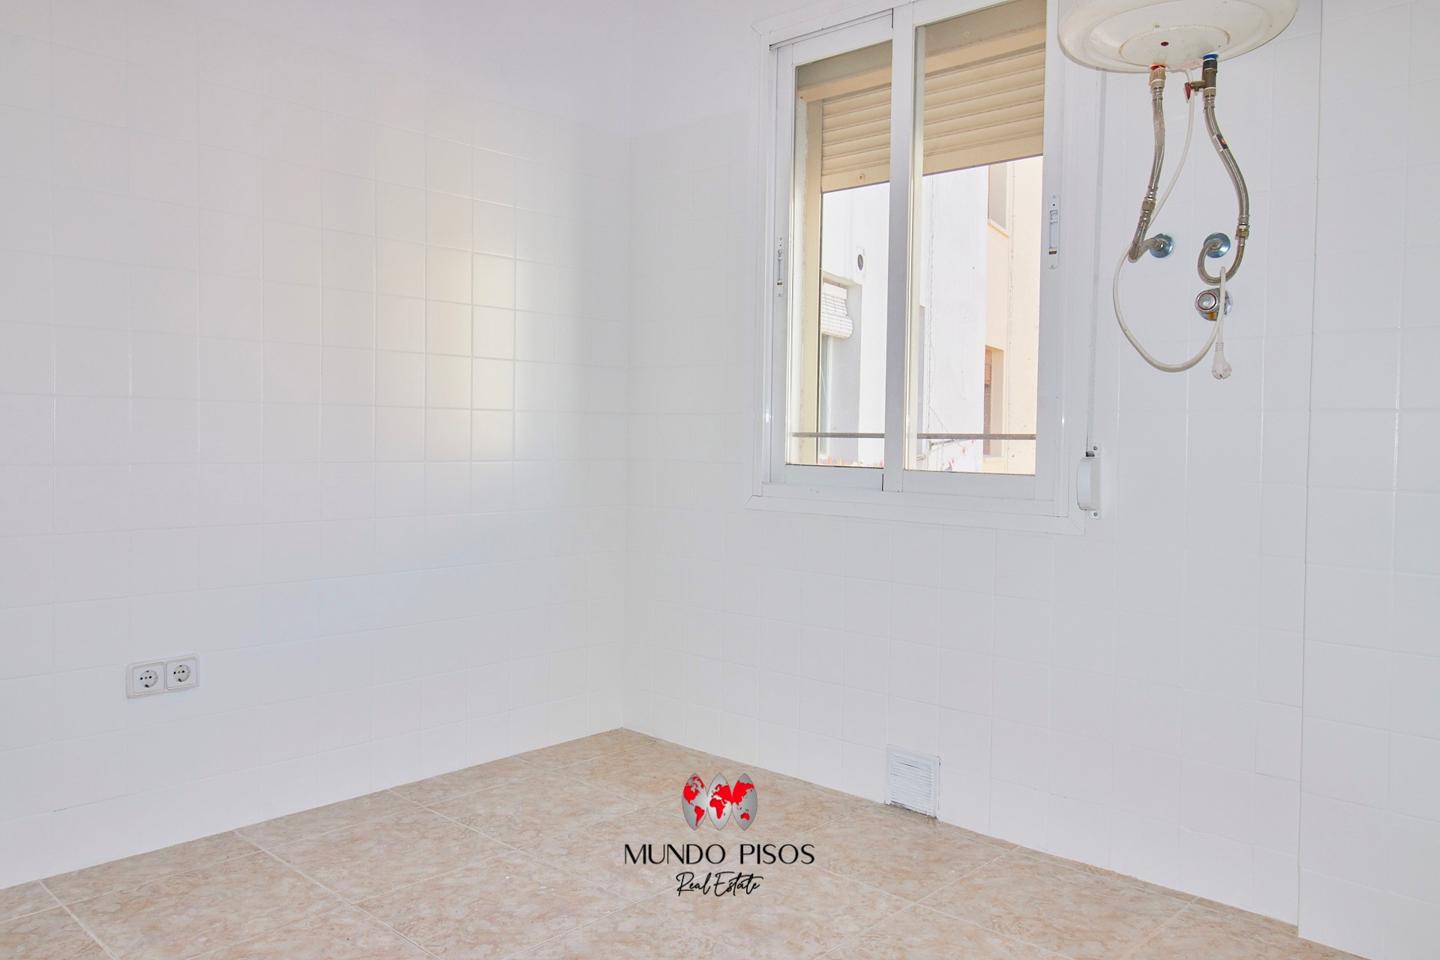 Refurbished apartment in Bons Aires, Palma de Mallorca, Balearic Islands.